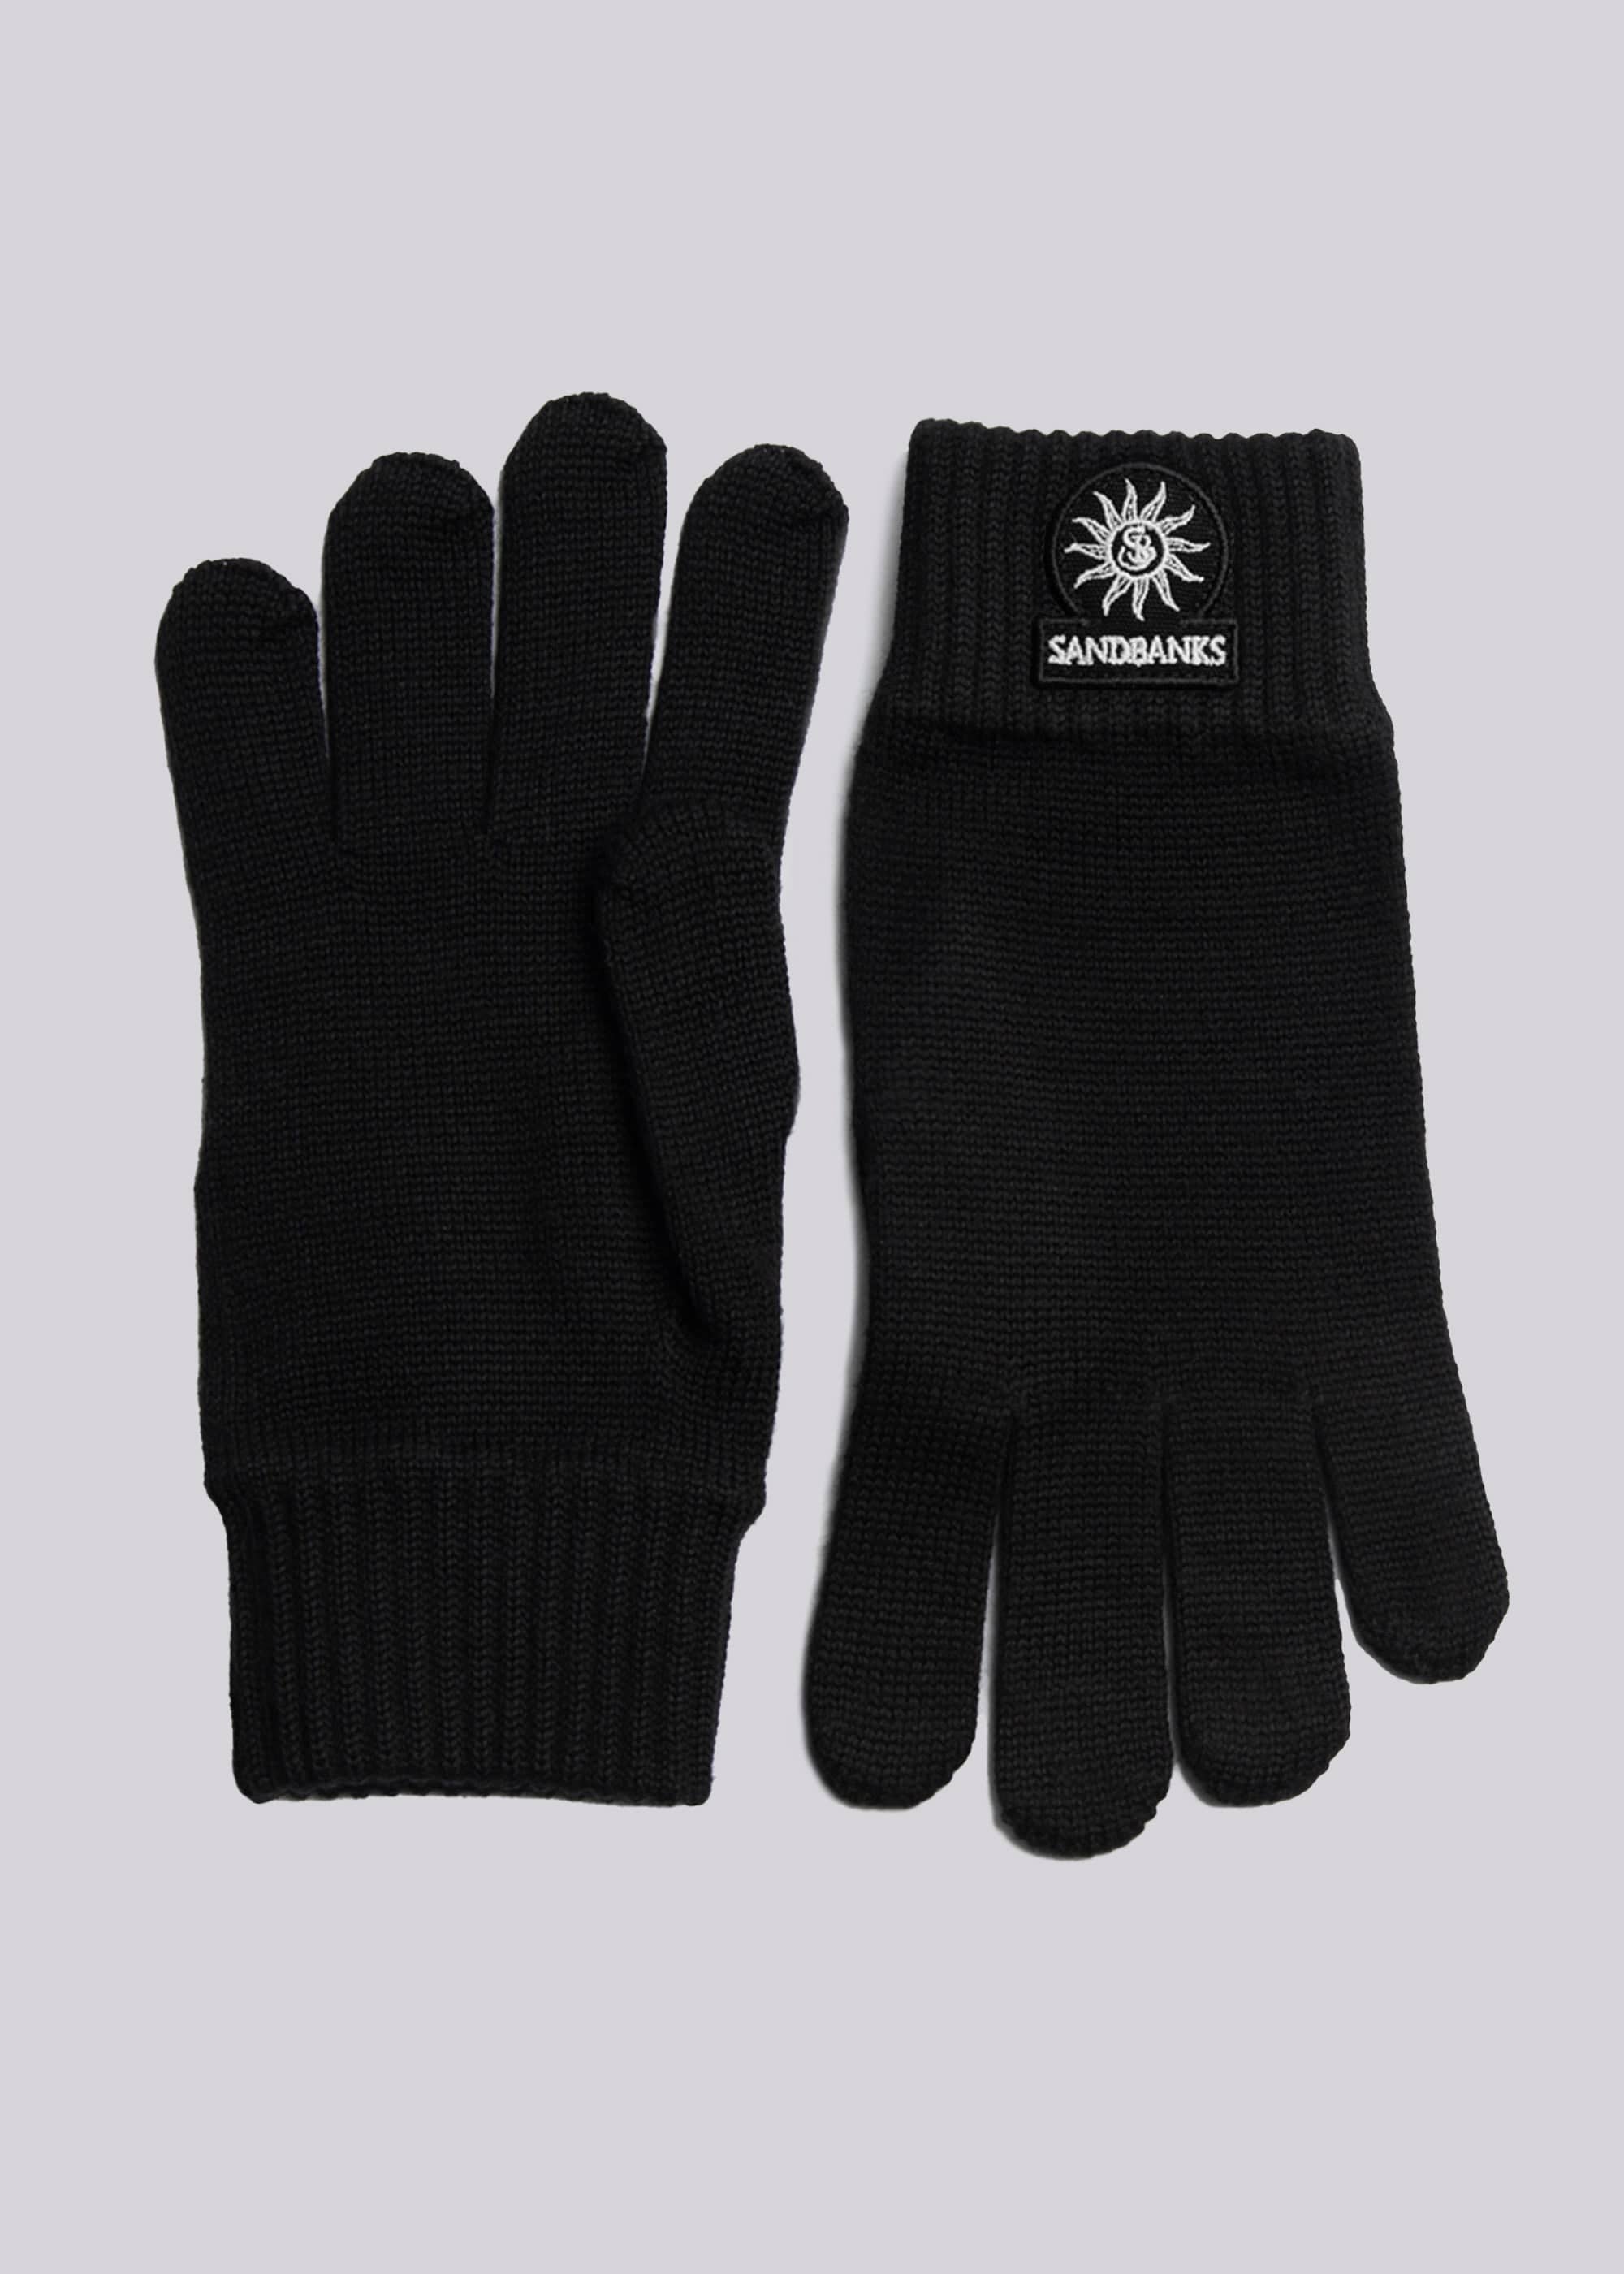 Sandbanks Badge Logo Gloves - Black